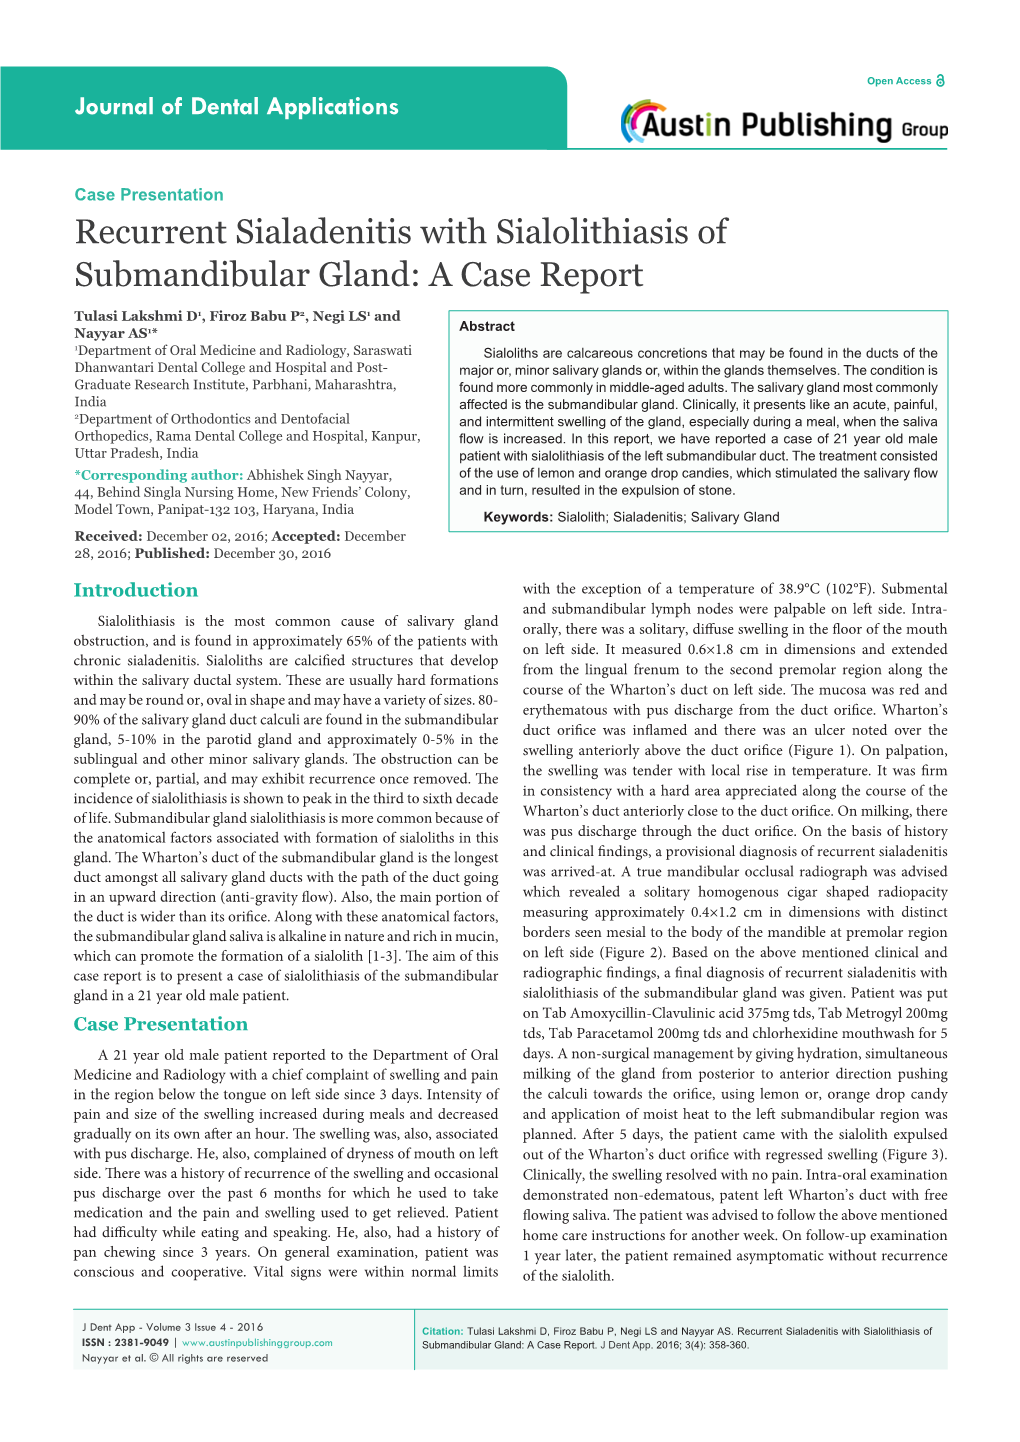 Recurrent Sialadenitis with Sialolithiasis of Submandibular Gland: a Case Report